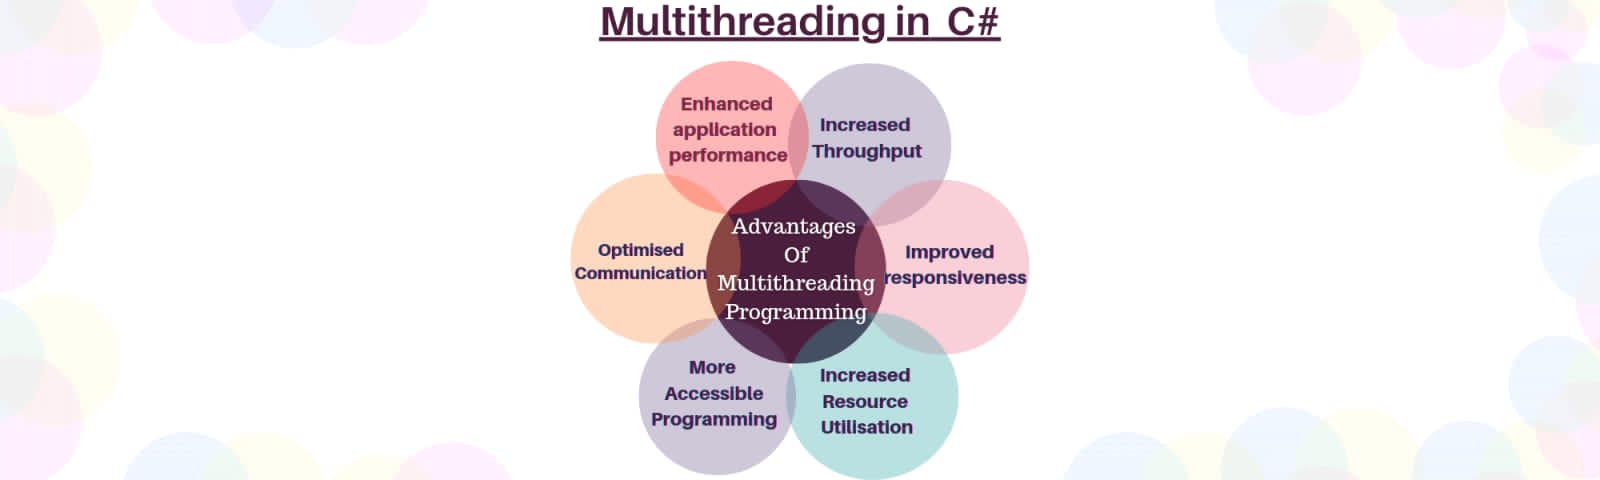 multithreading in c#